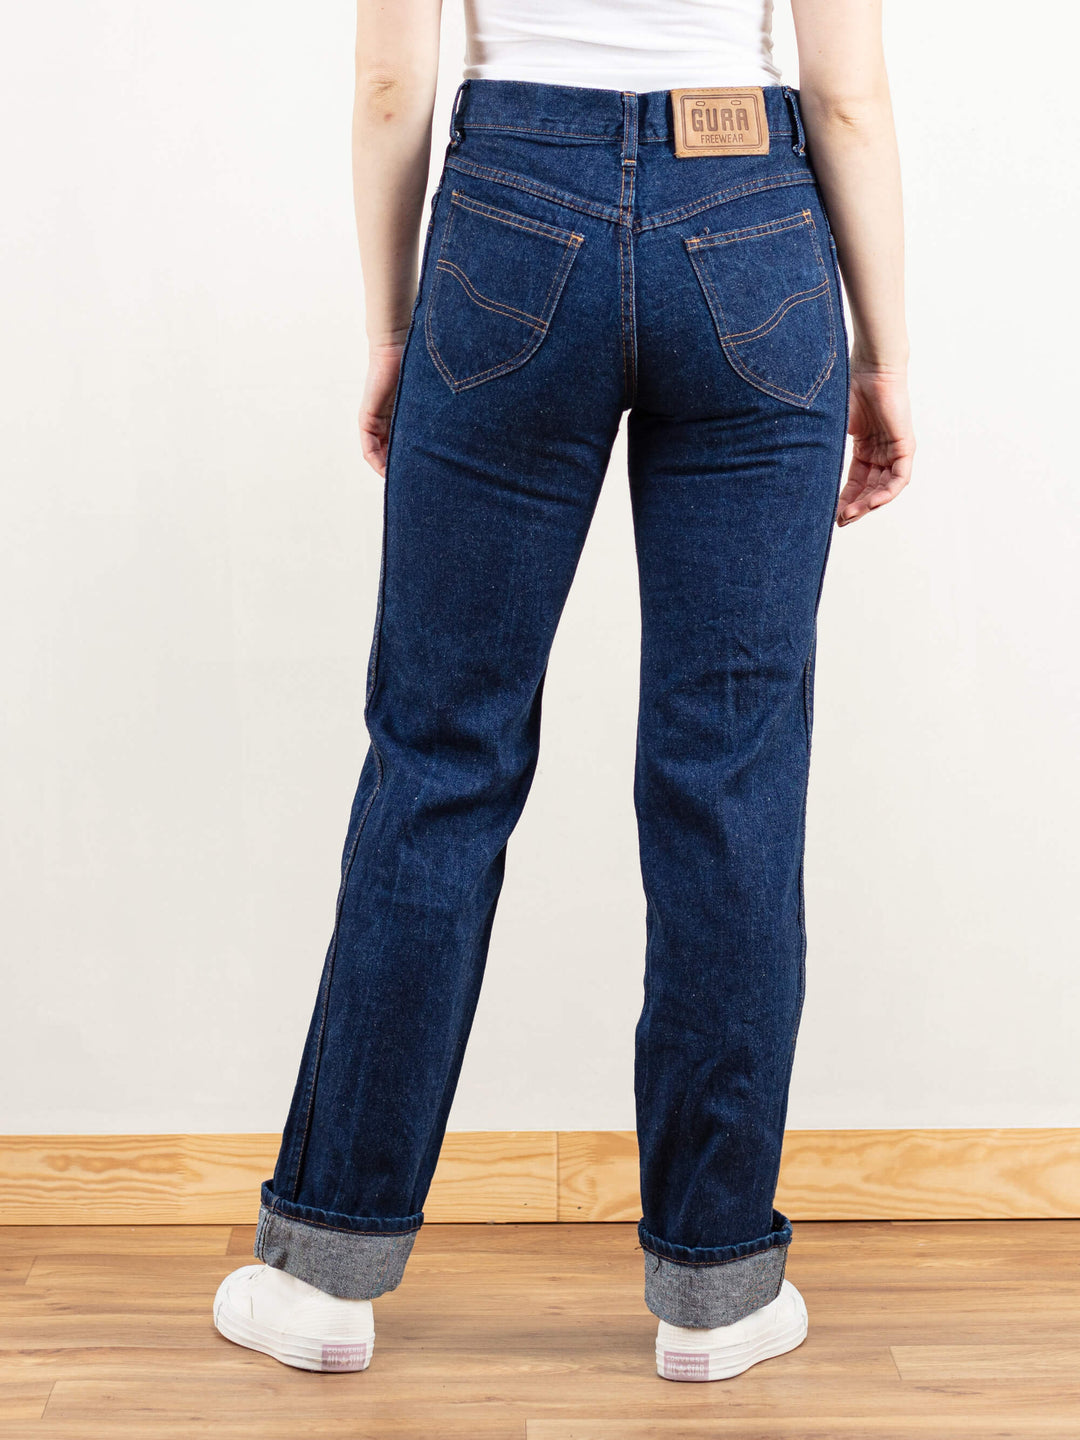 Women Blue Jeans vintage high waist regular fit tapered leg jeans dark wash blue women jeans zip fly northerngirlstore jeans size medium